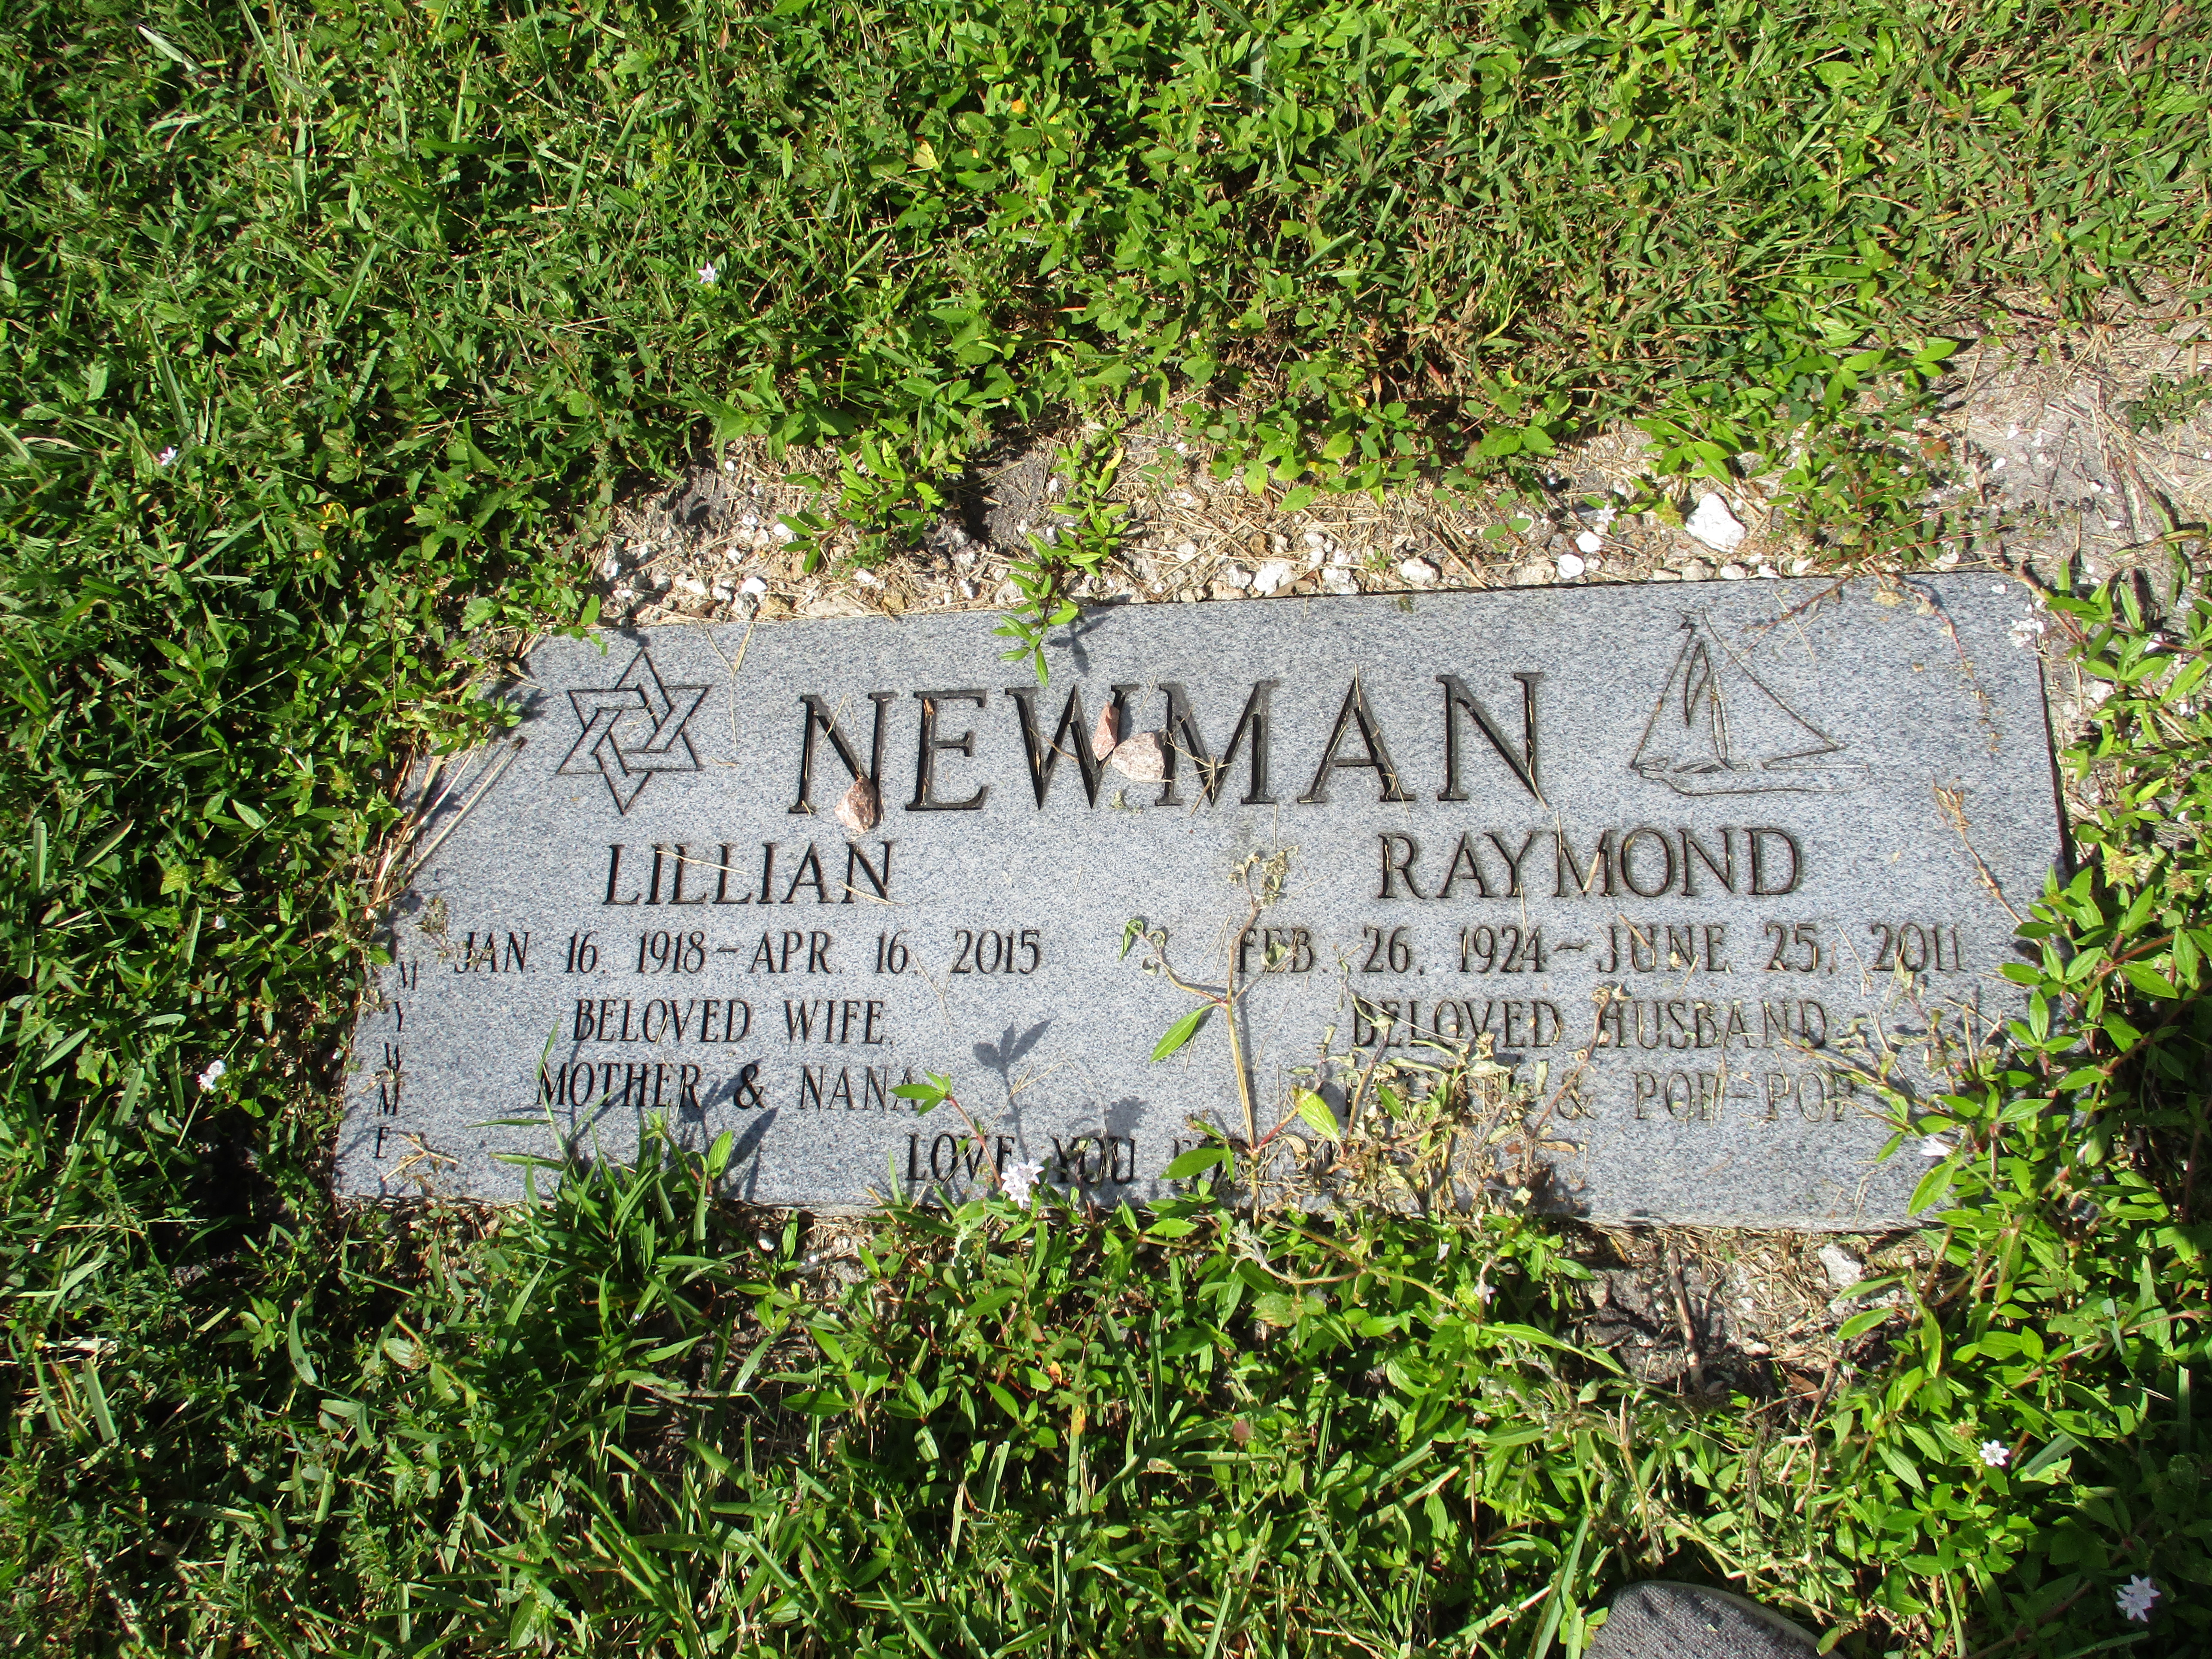 Lillian Newman